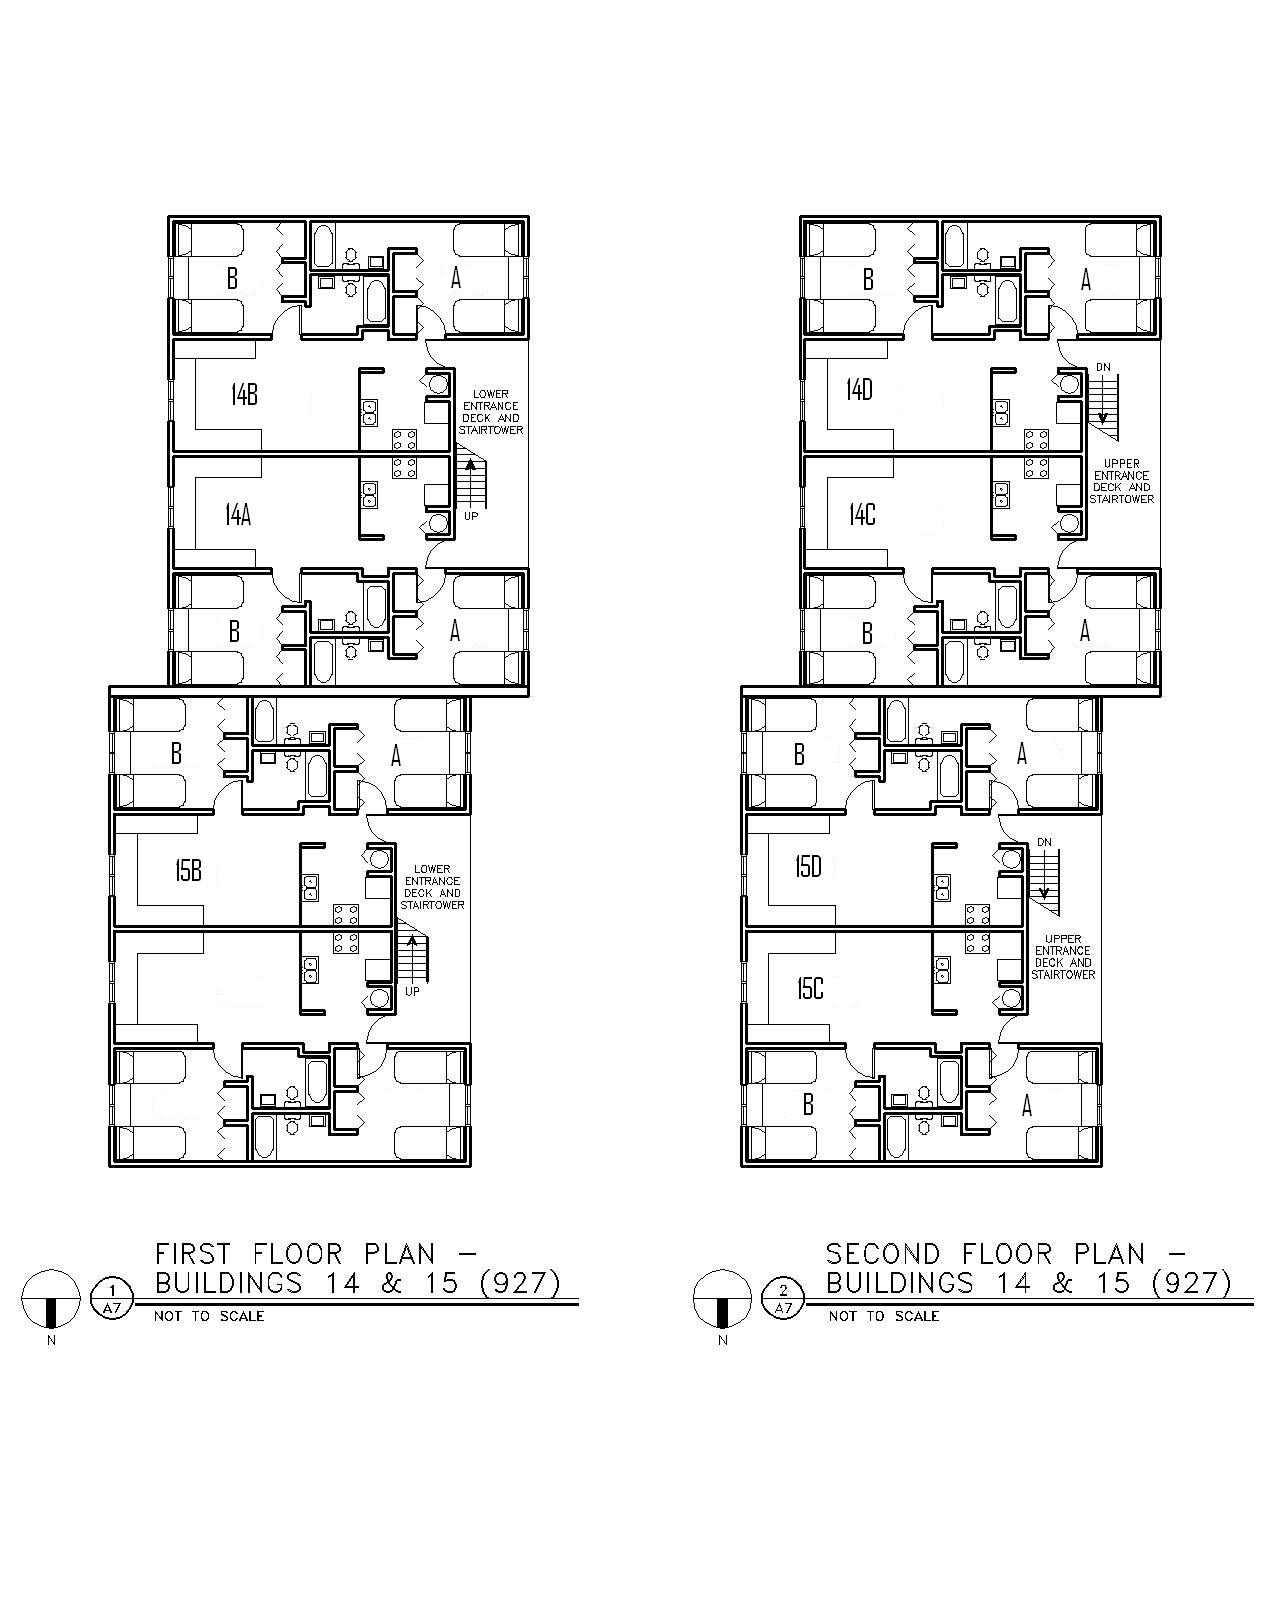 Floor Plan for Buildings 14 & 15